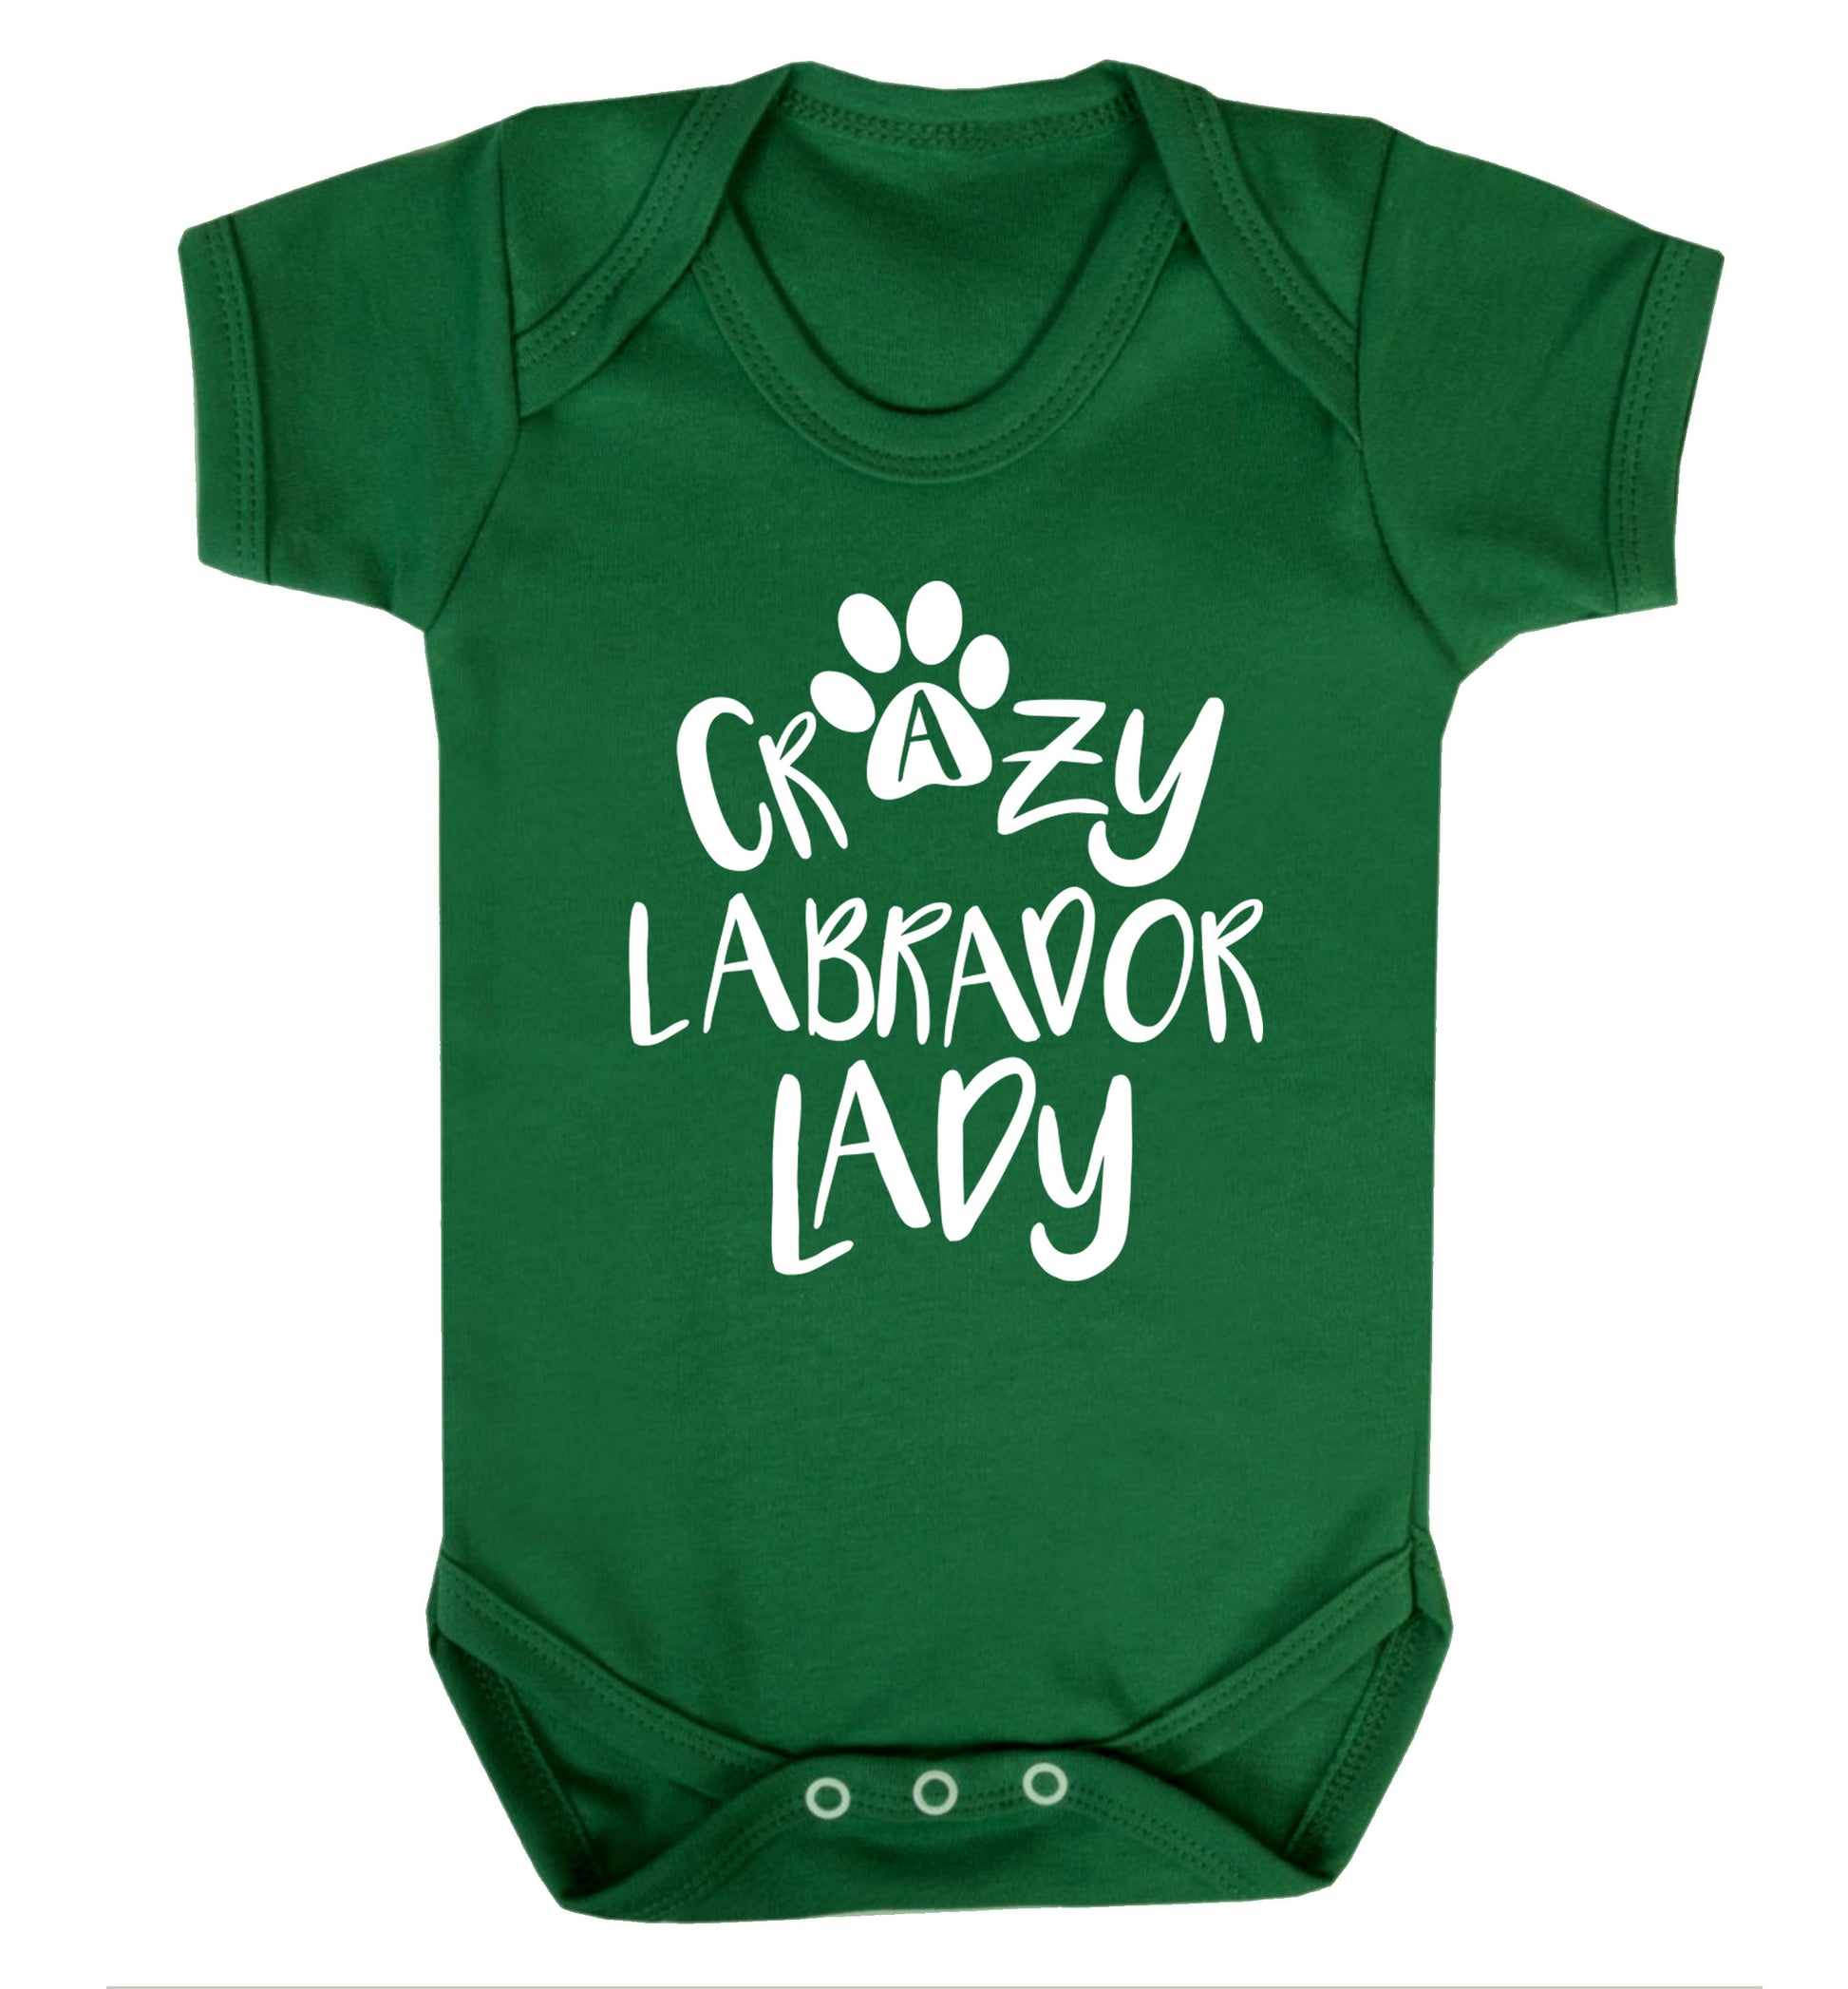 Crazy labrador lady Baby Vest green 18-24 months